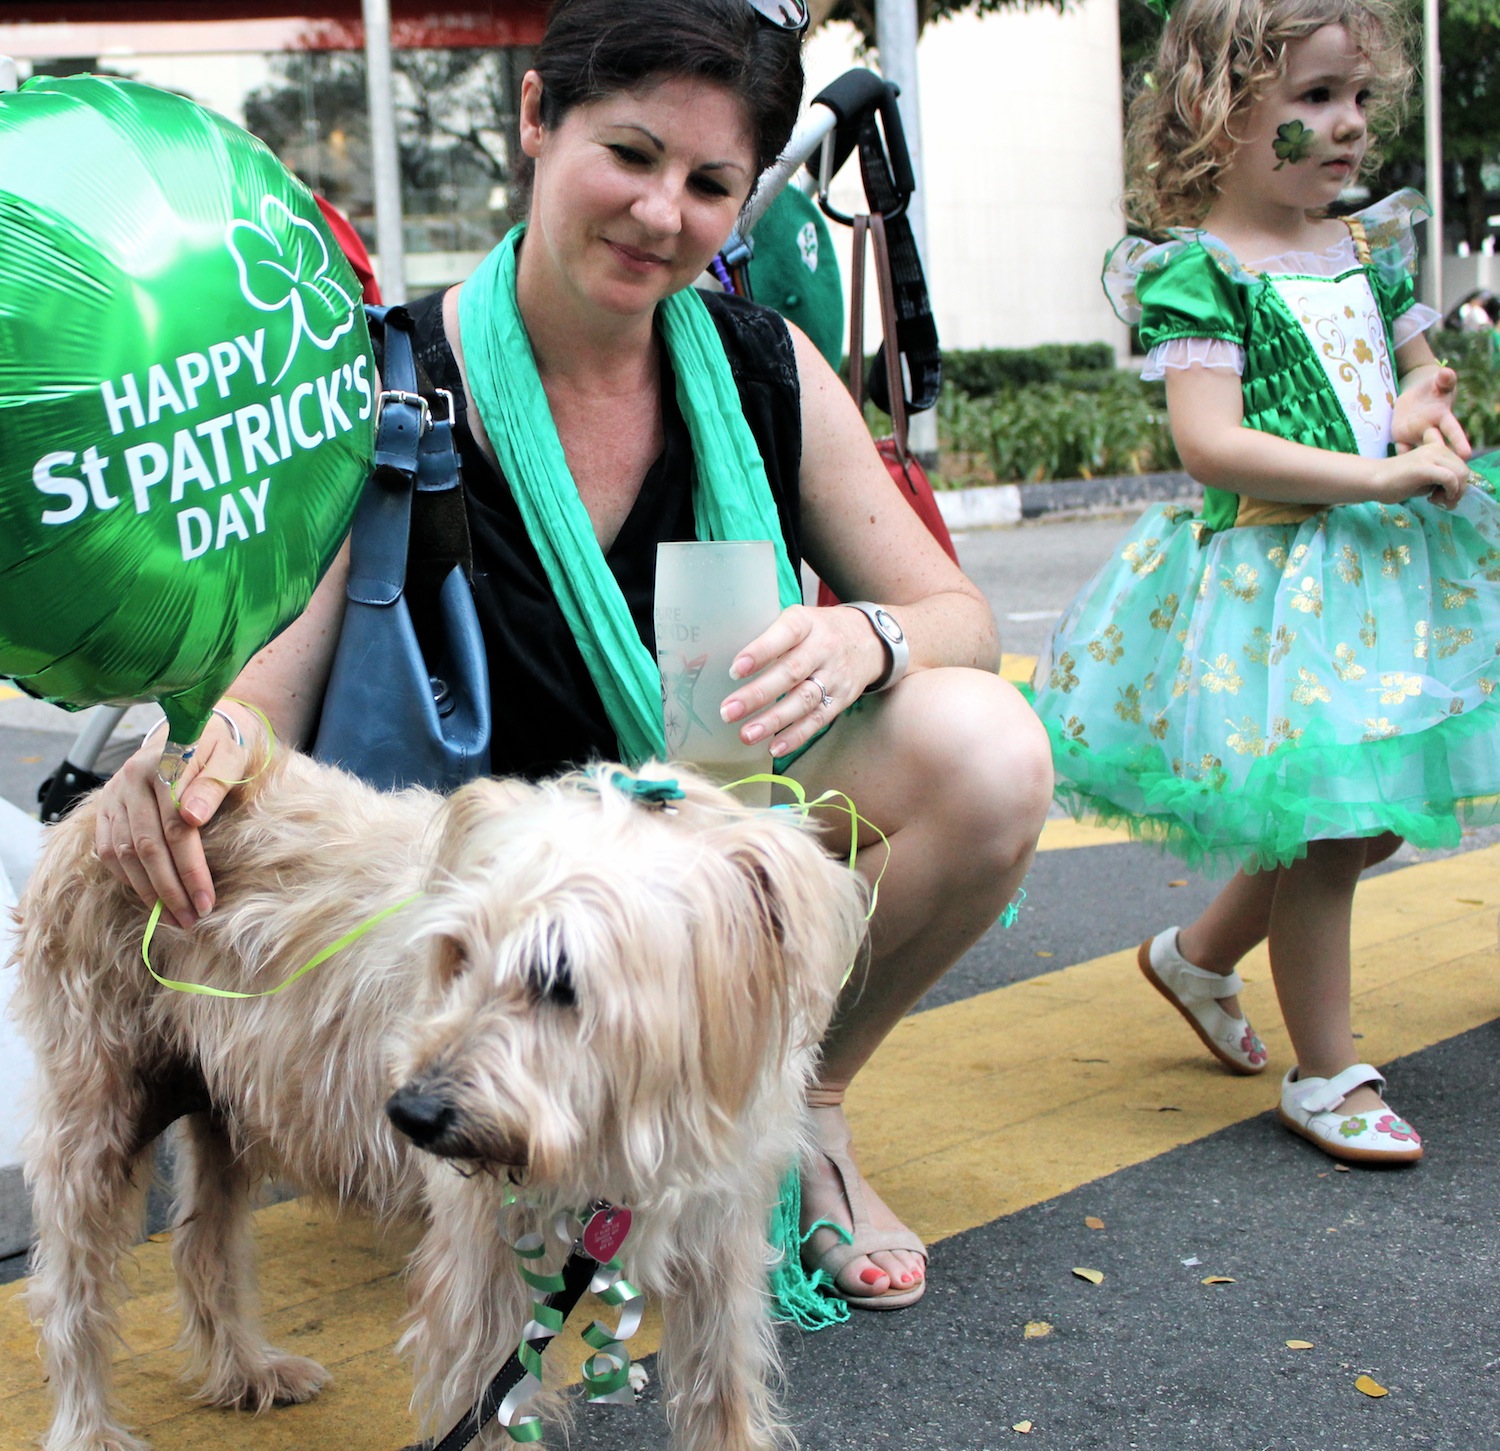 St Patrick’s Day 2015: Street Festival with Guinness - Alvinology